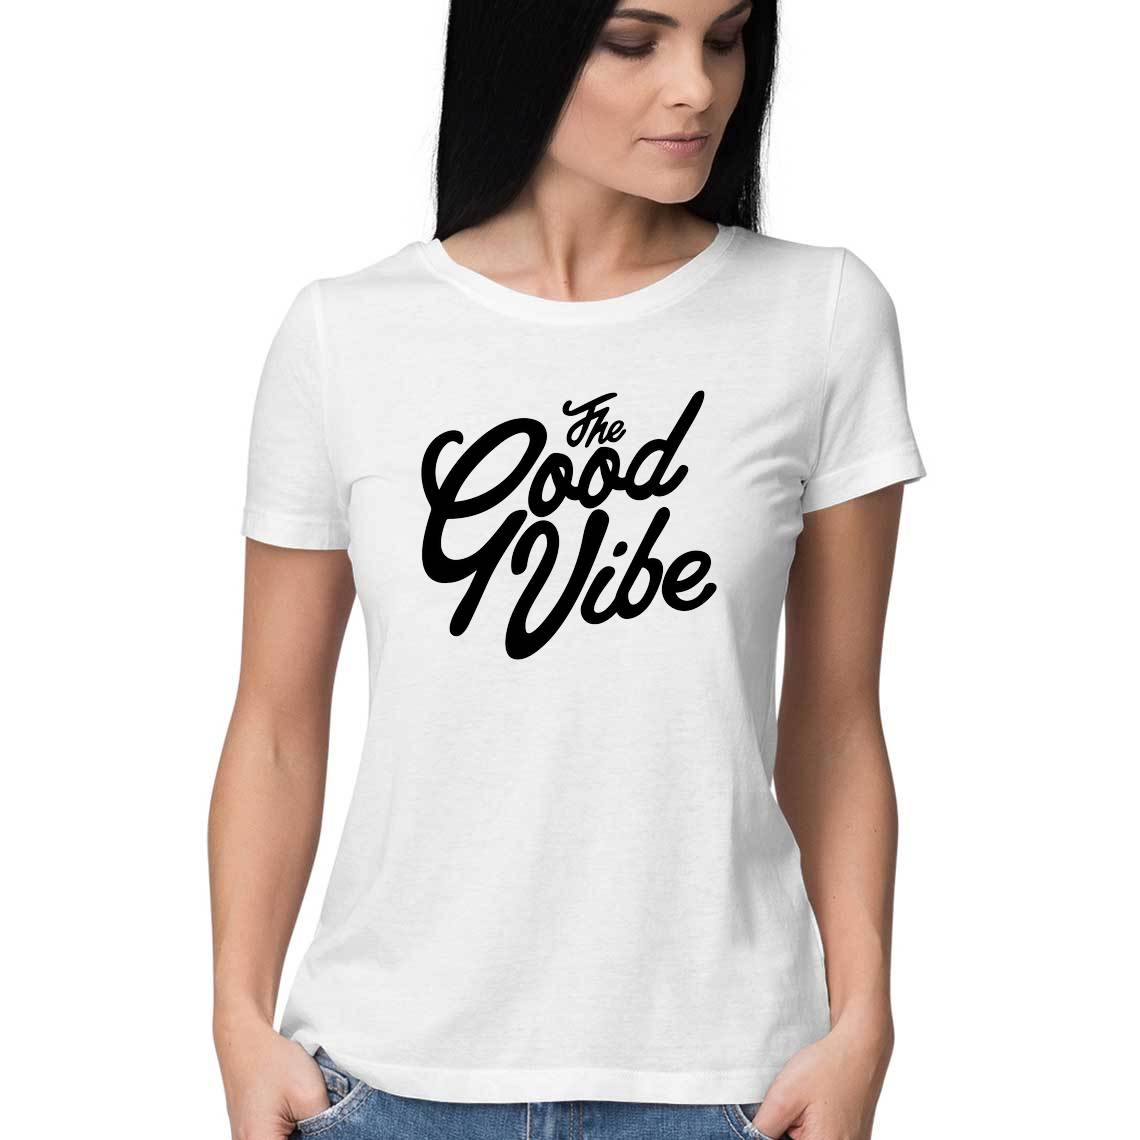 Good Vibe T-shirt